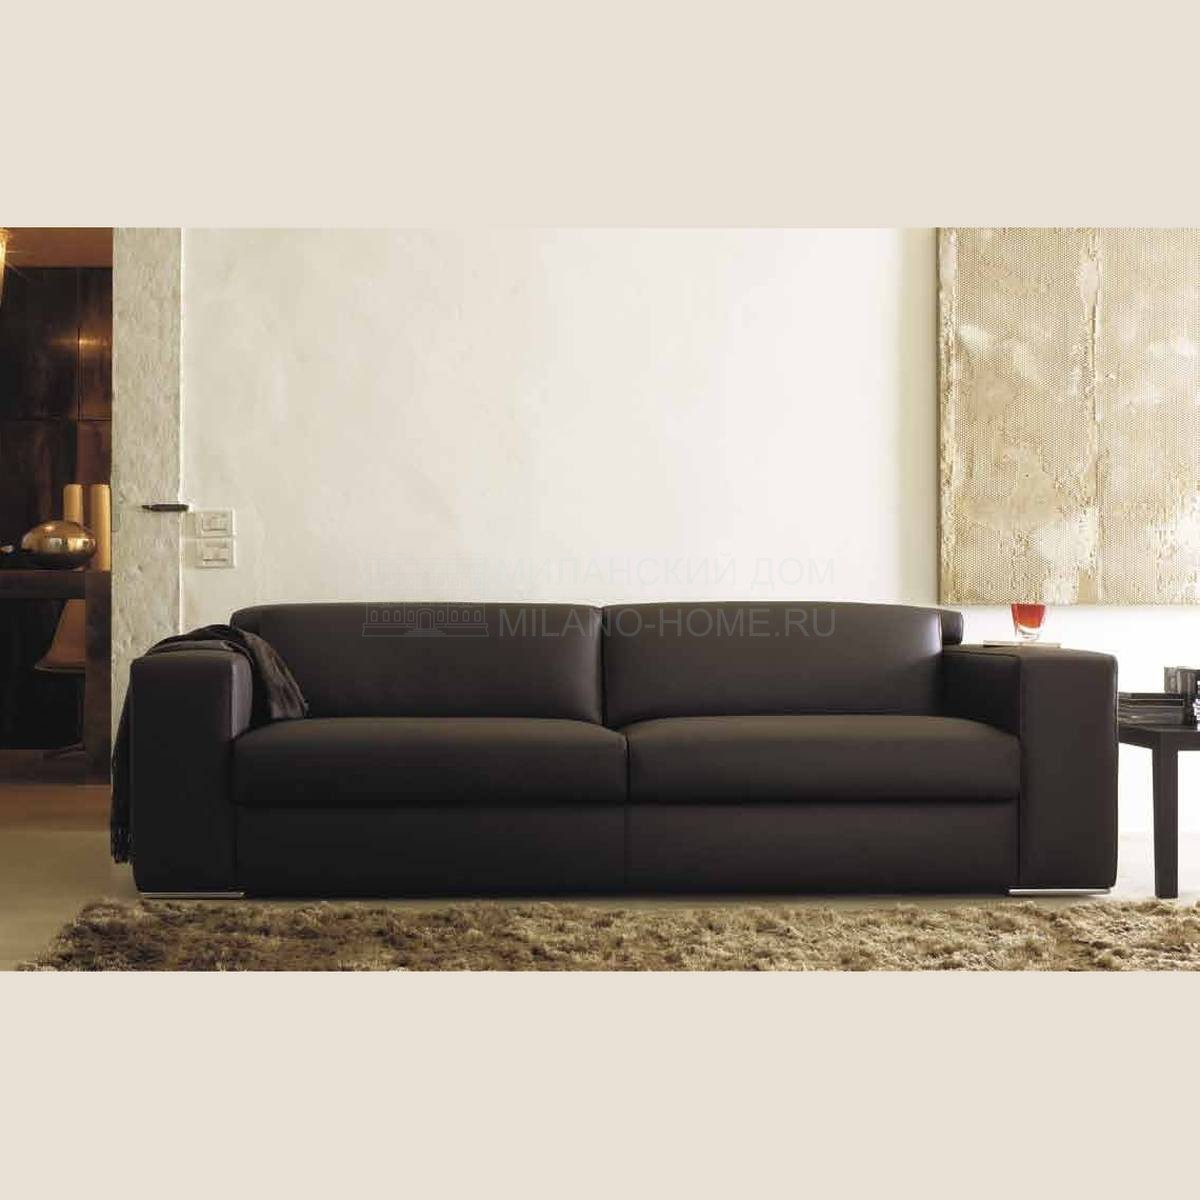 Прямой диван Richmond/sofa из Италии фабрики GIULIO MARELLI